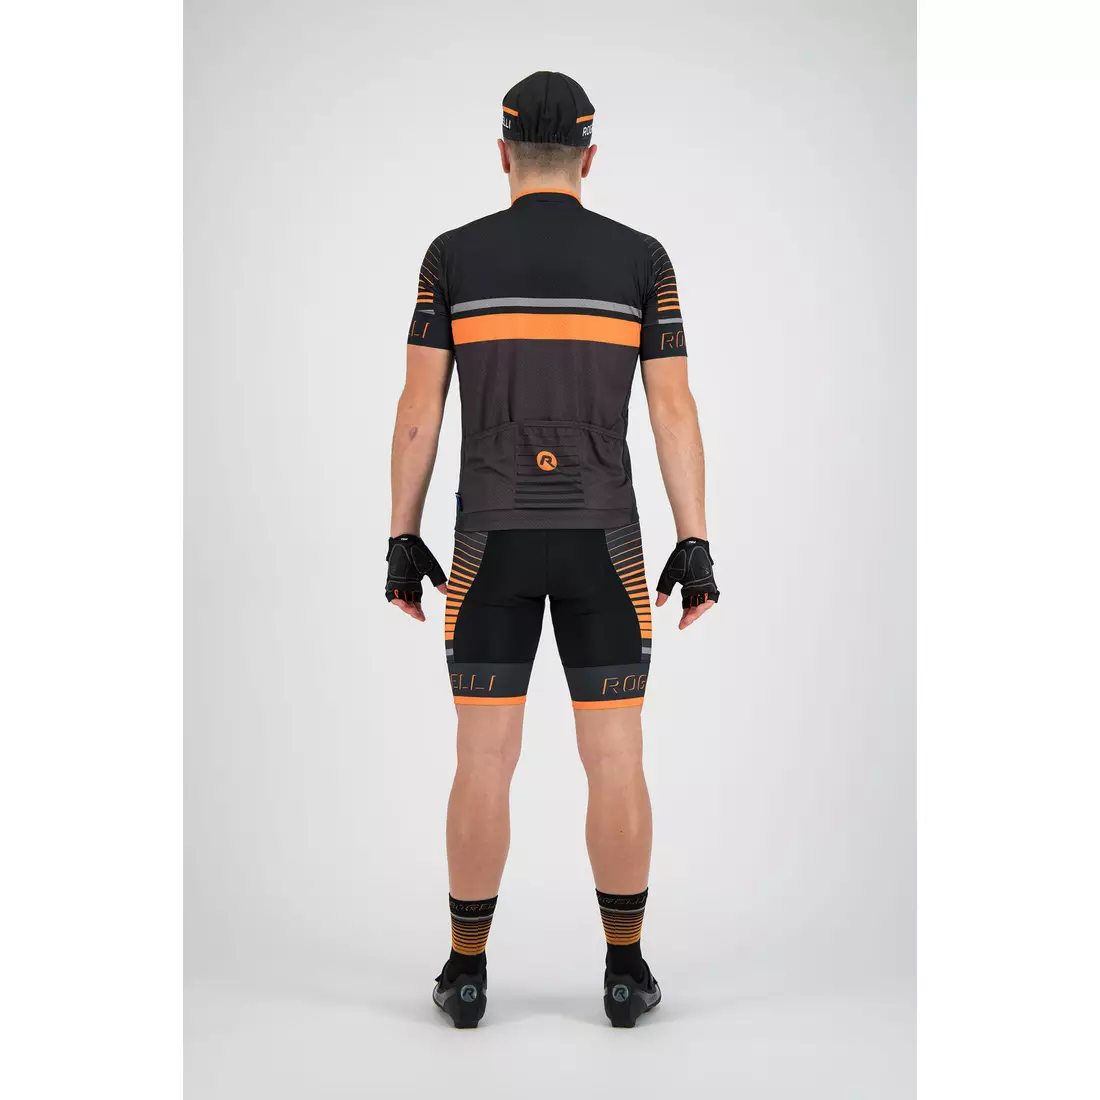 Rogelli HERI 002.239 Men Bike Bib shorts Black/Gray/Orange